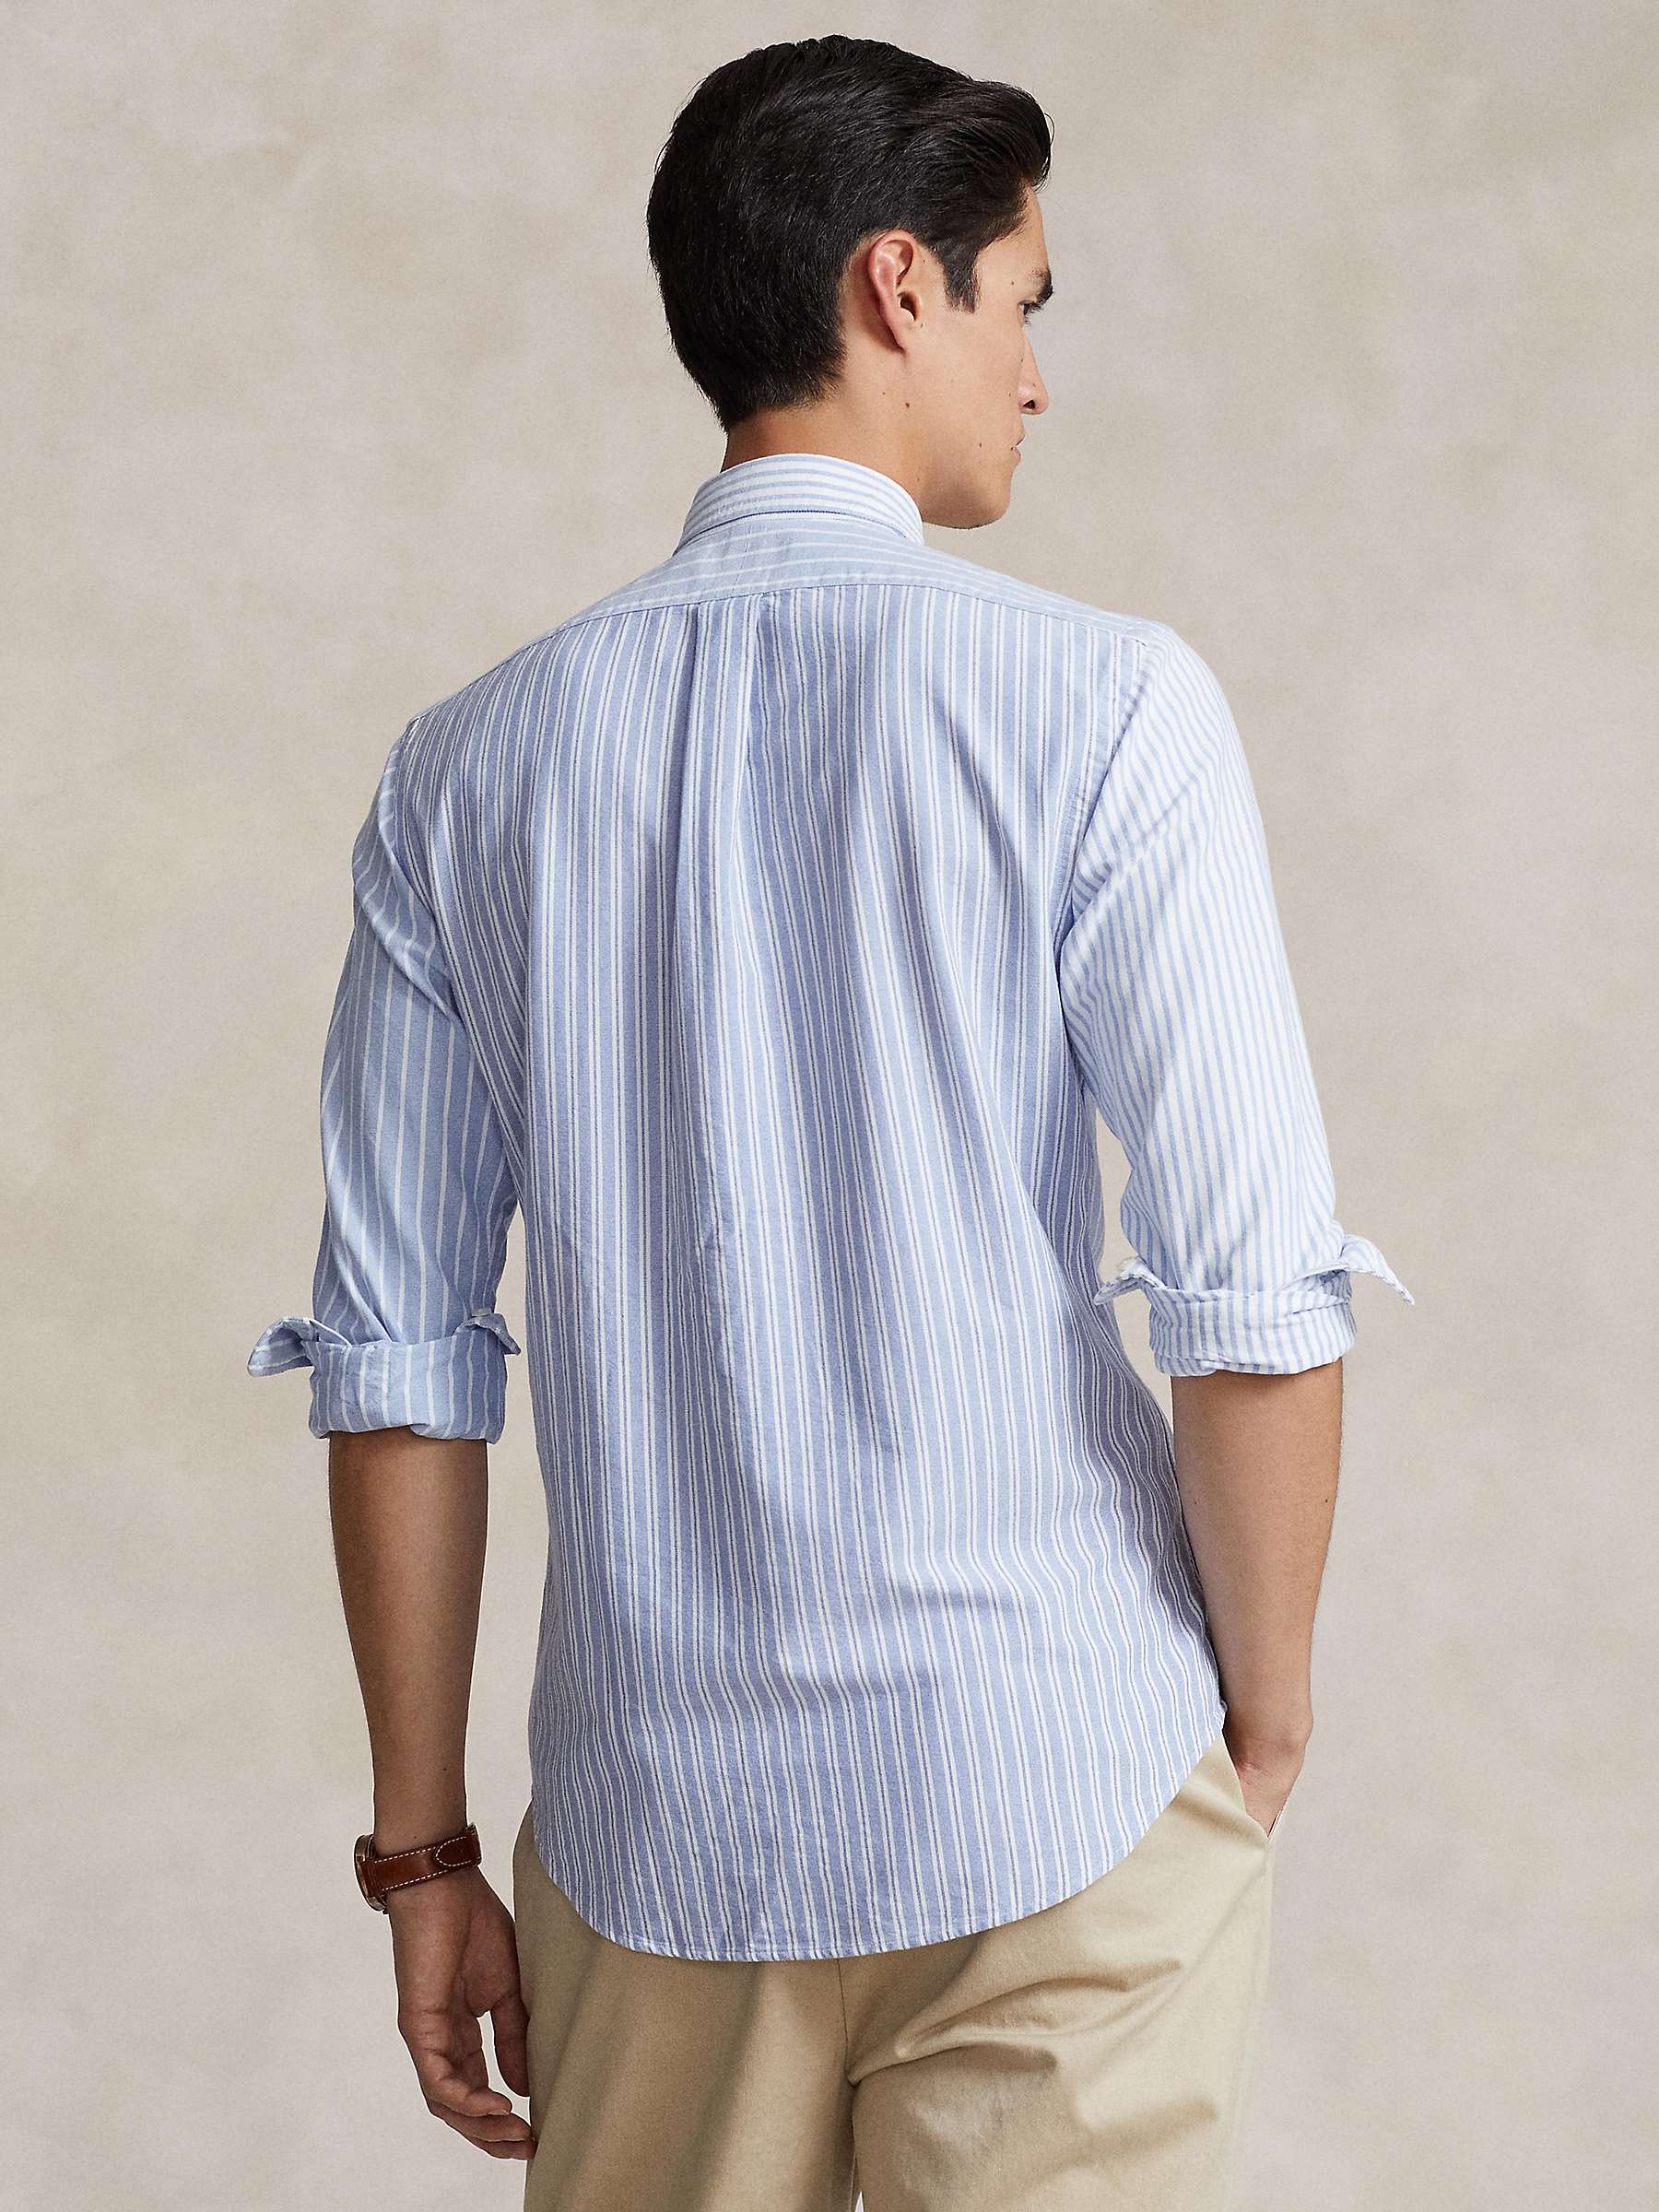 Buy Polo Ralph Lauren Custom Fit Striped Oxford Fun Shirt, Blue/White Online at johnlewis.com